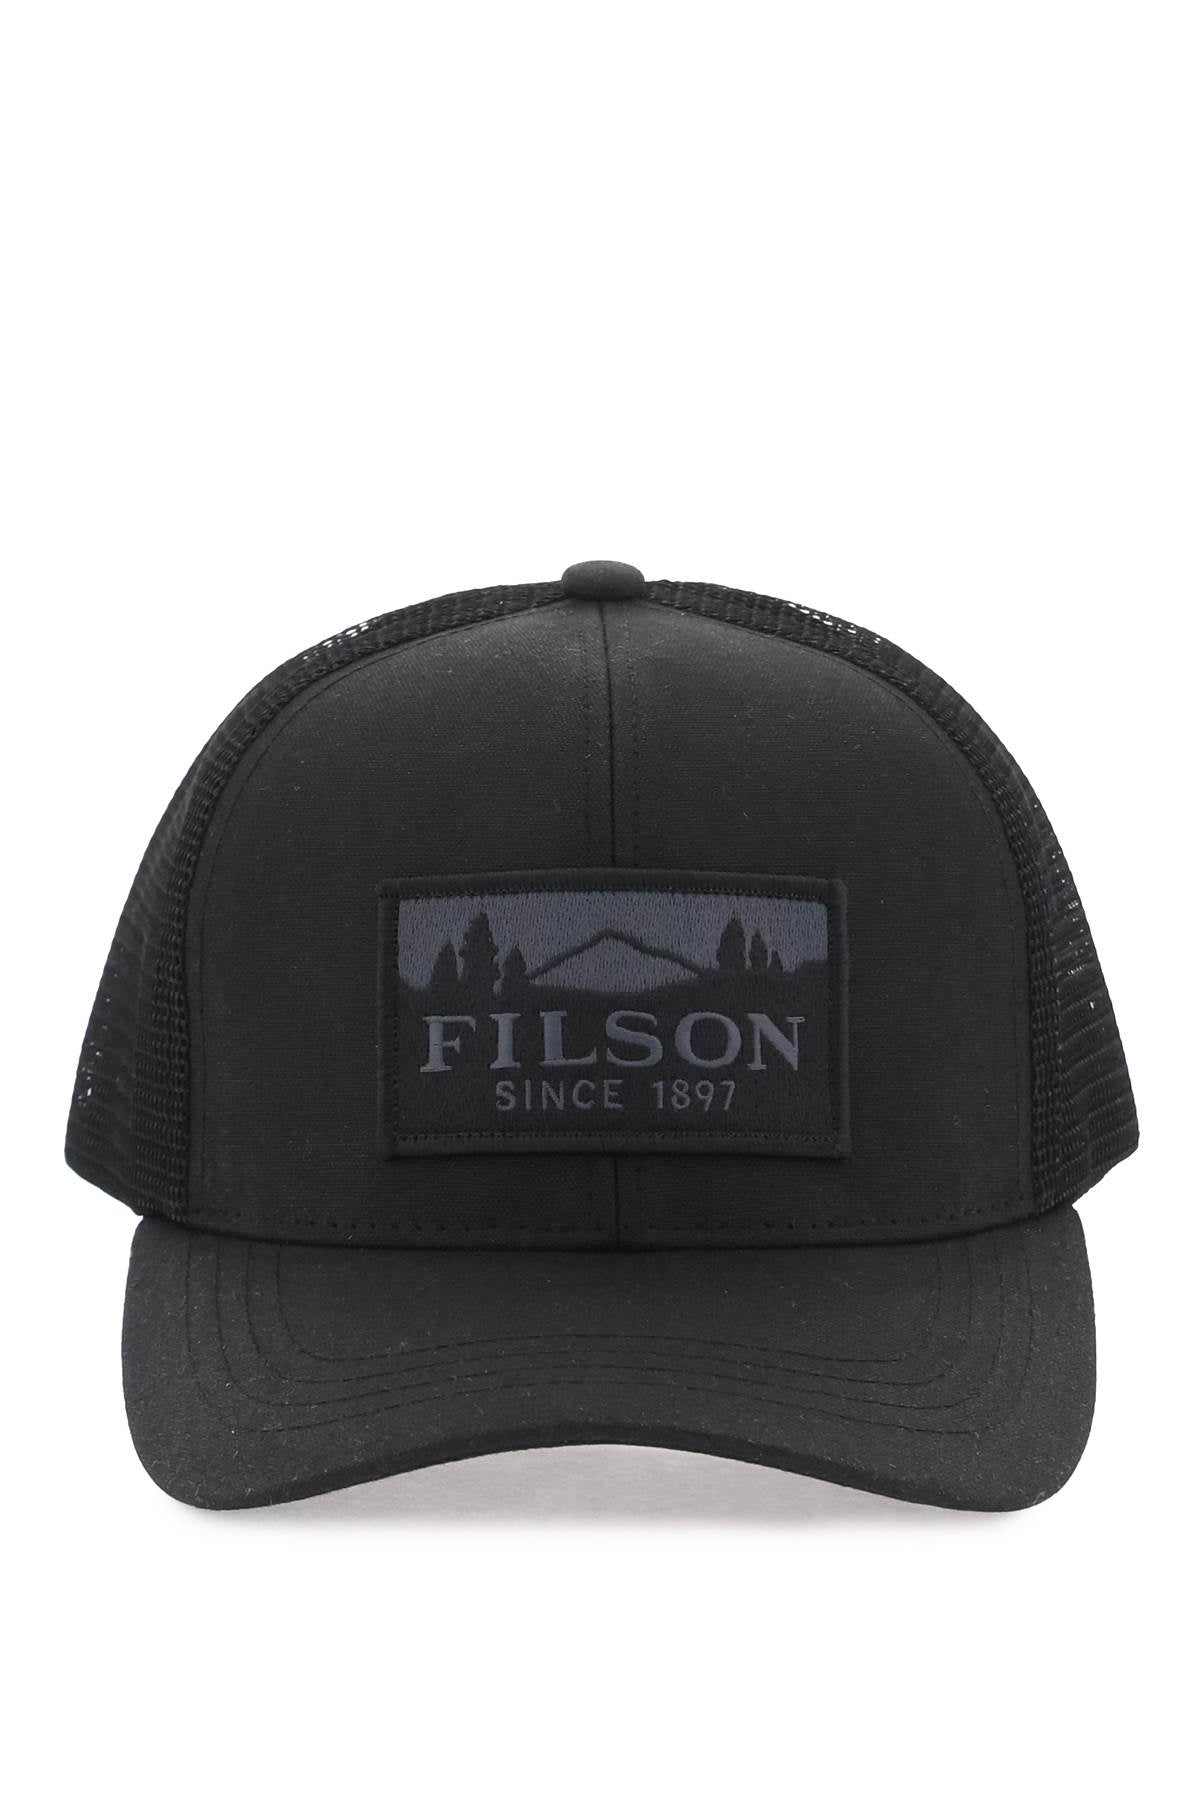 Filson Water Repellent Cotton Trucker   Black